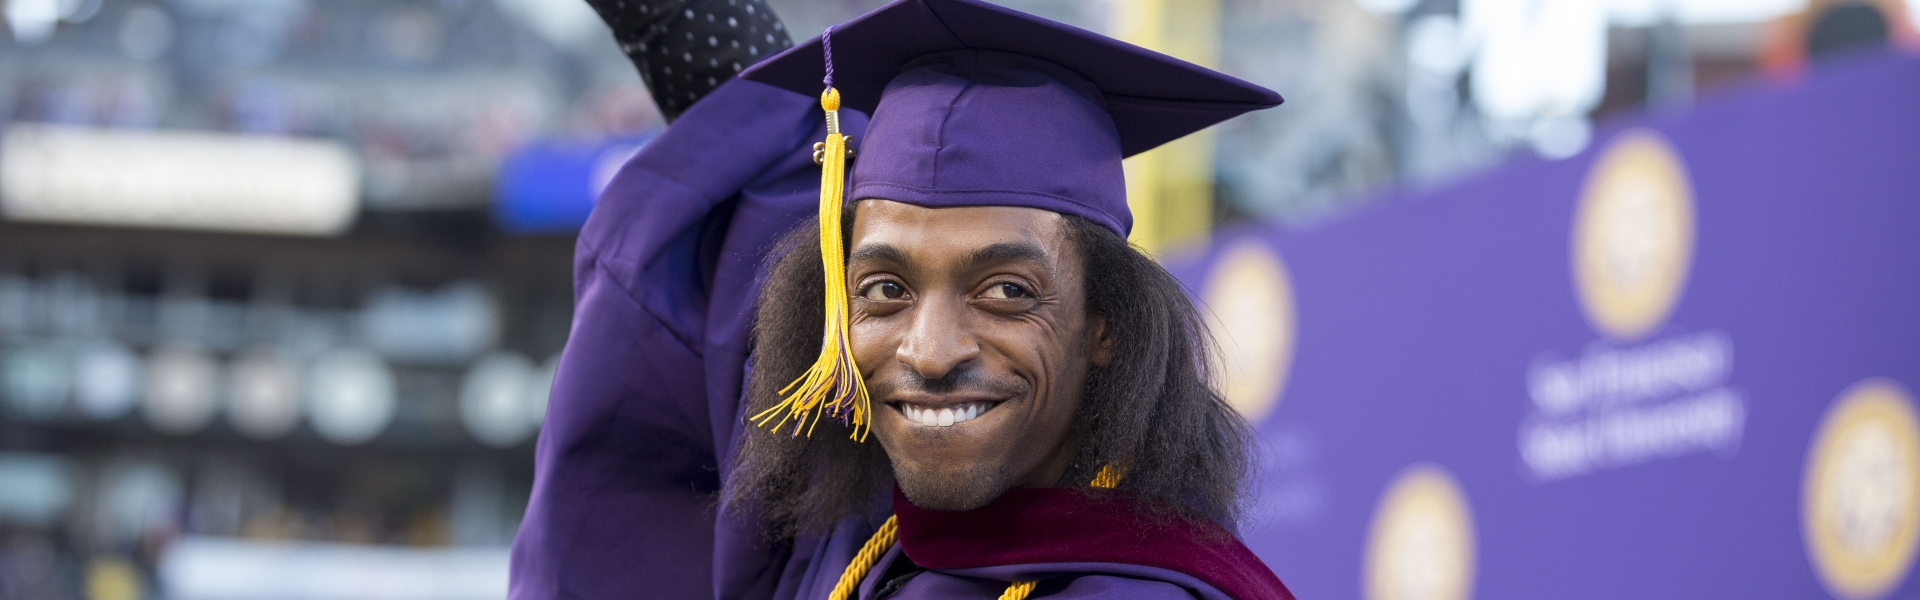 Man celebrates his graduation at commencement